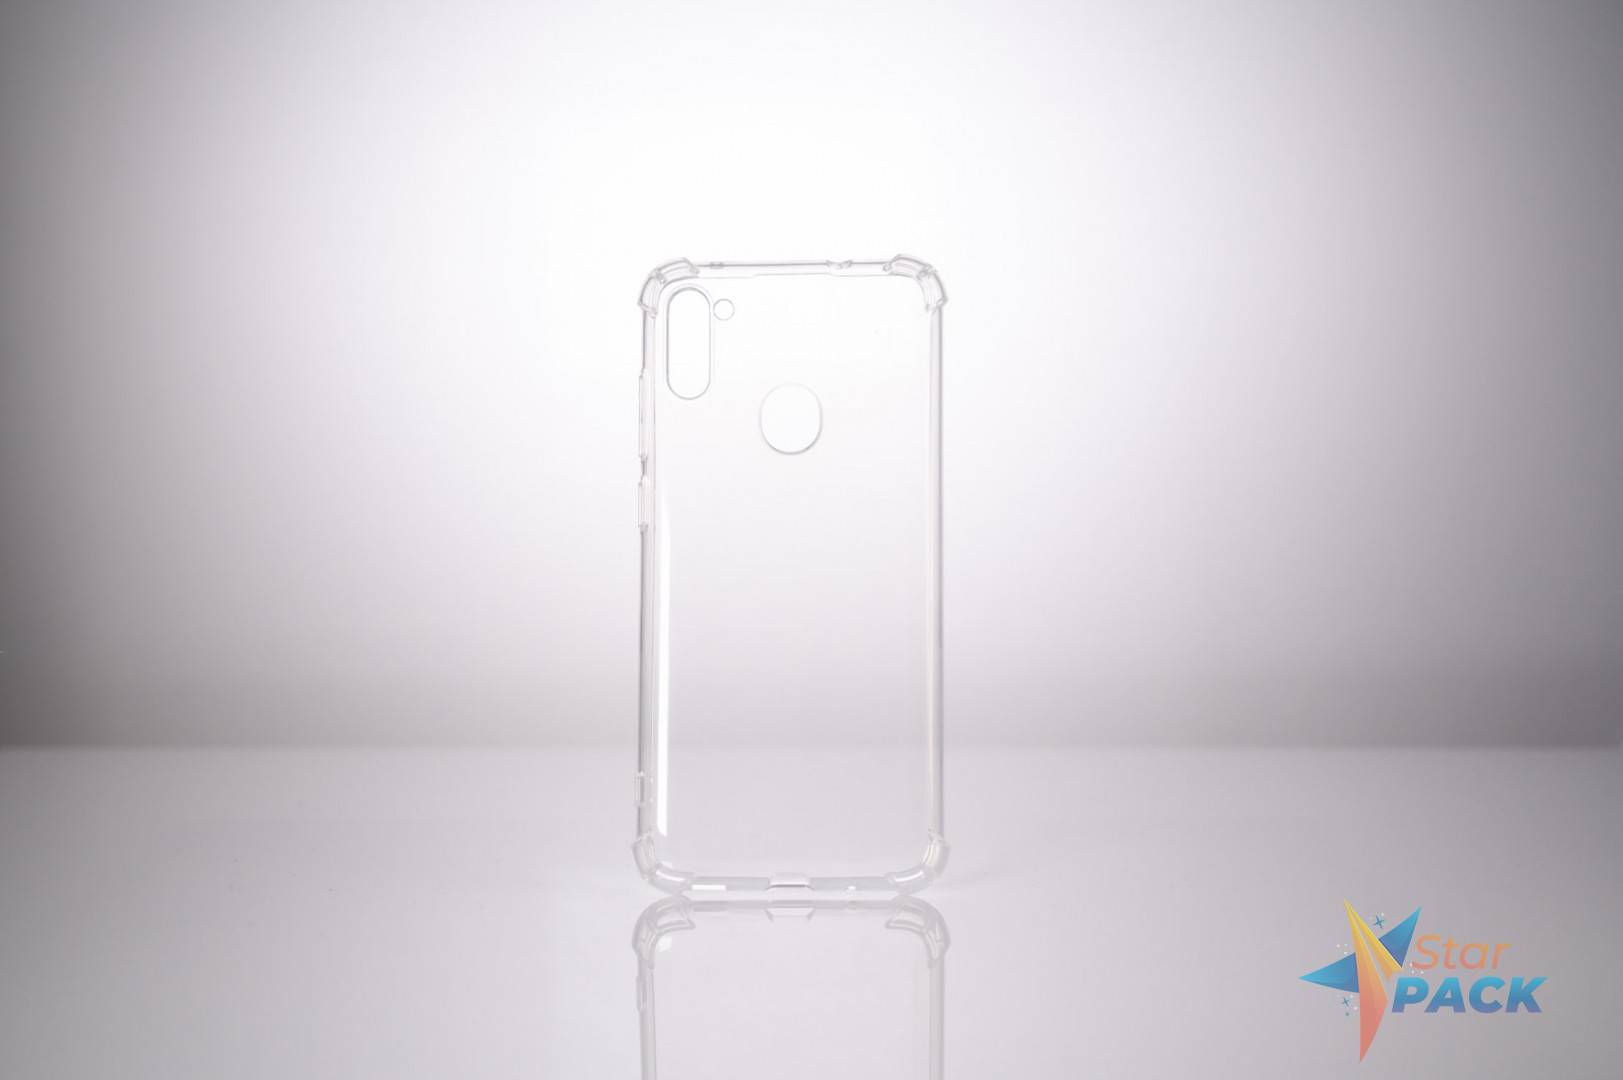 Husa Samsung Galaxy M11 Spacer, transparenta, grosime 1.5mm, protectie suplimentara antisoc la colturi, material flexibil TPU